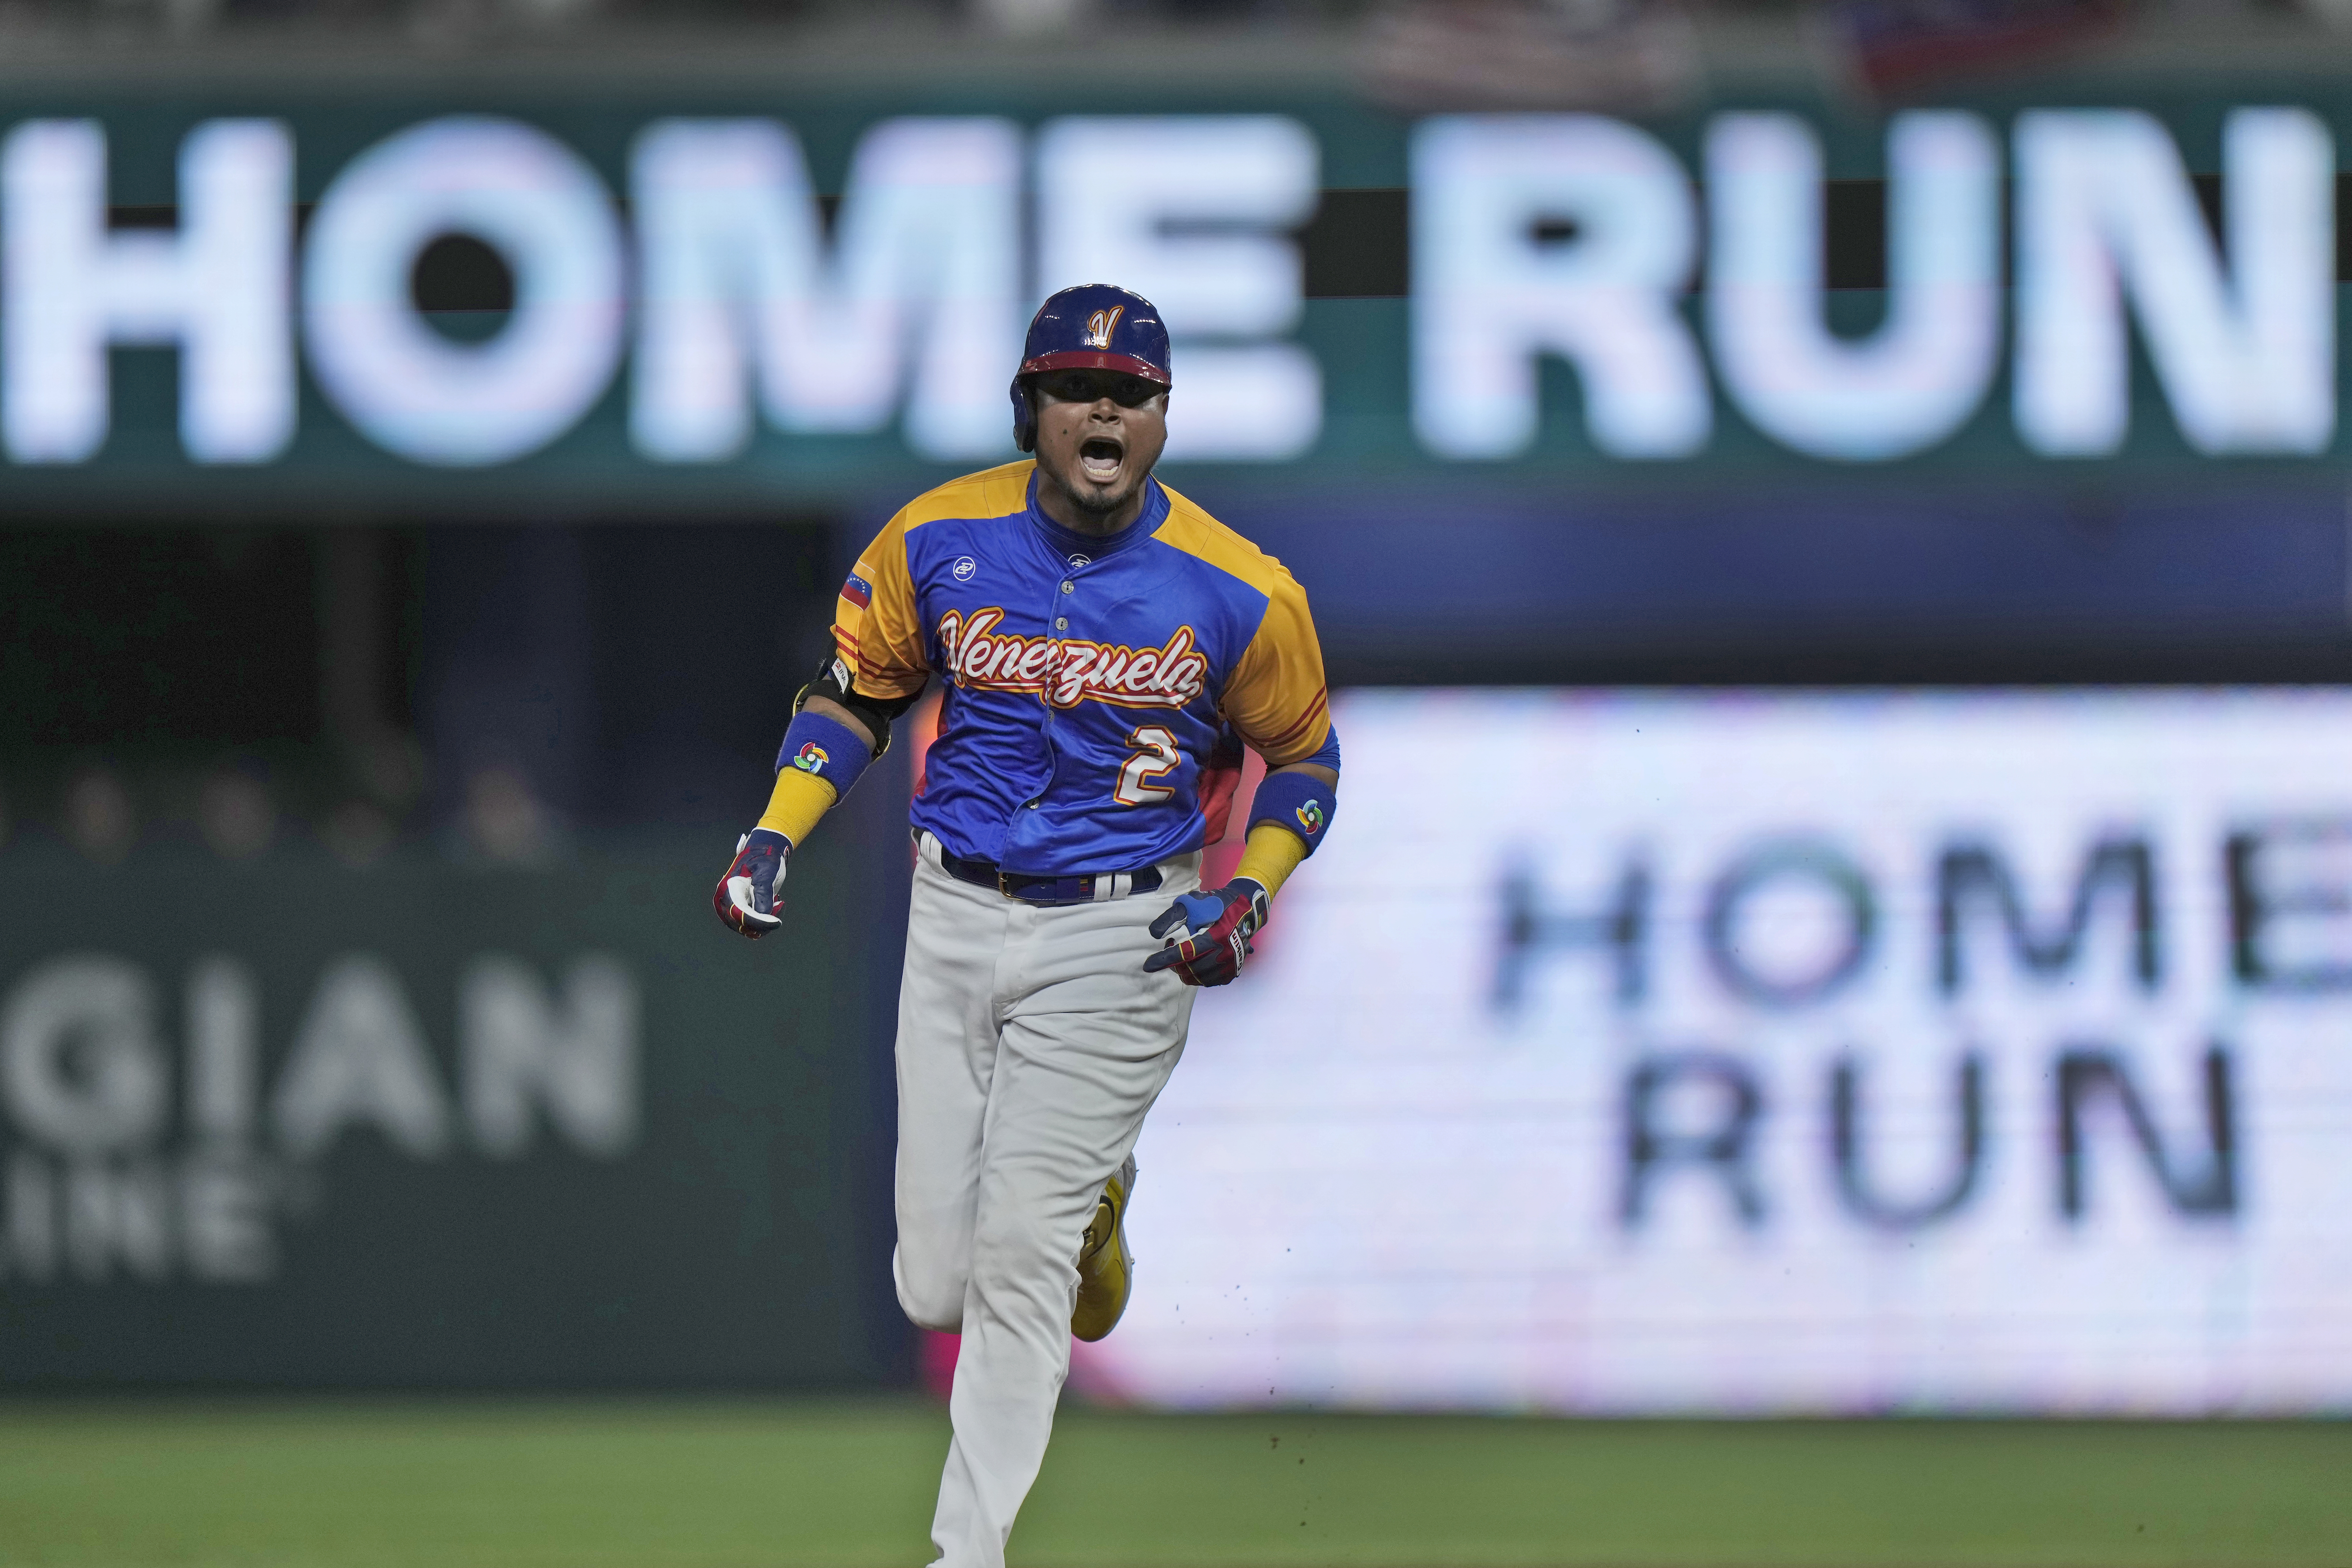 Turner's eighth-inning grand slam lifts US over Venezuela, into